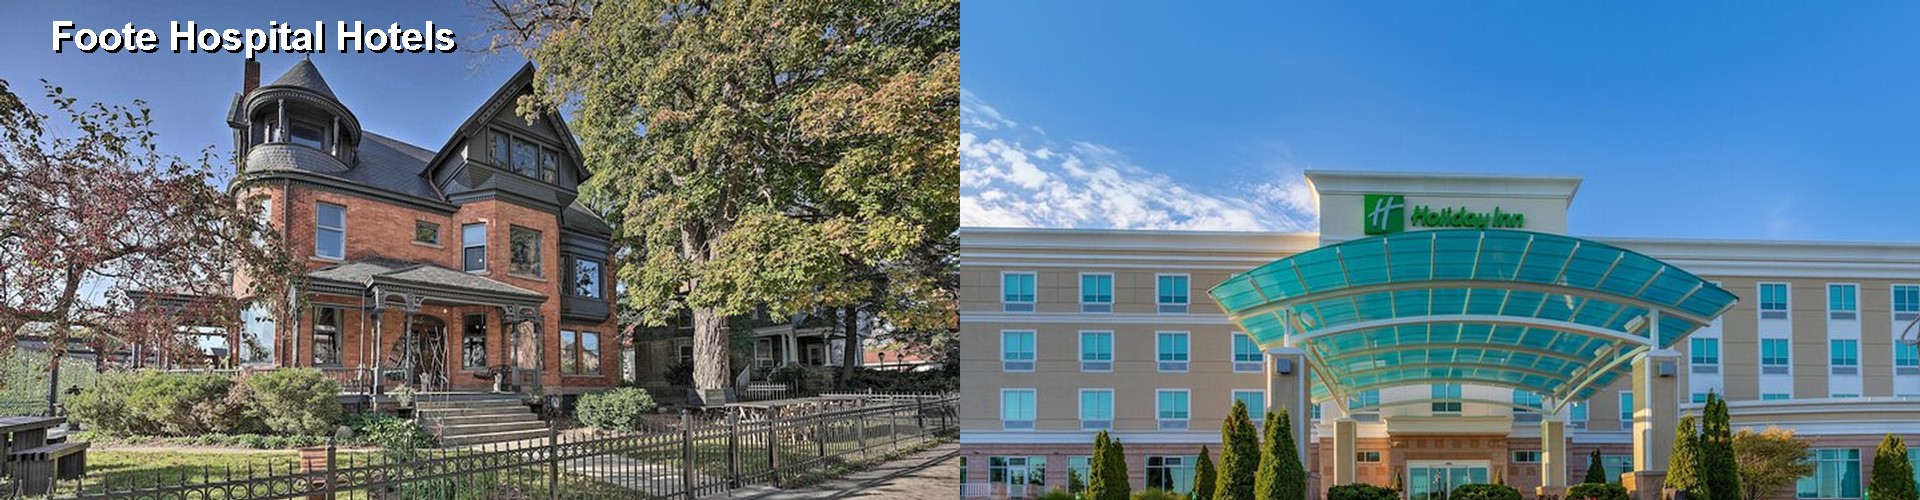 4 Best Hotels near Foote Hospital